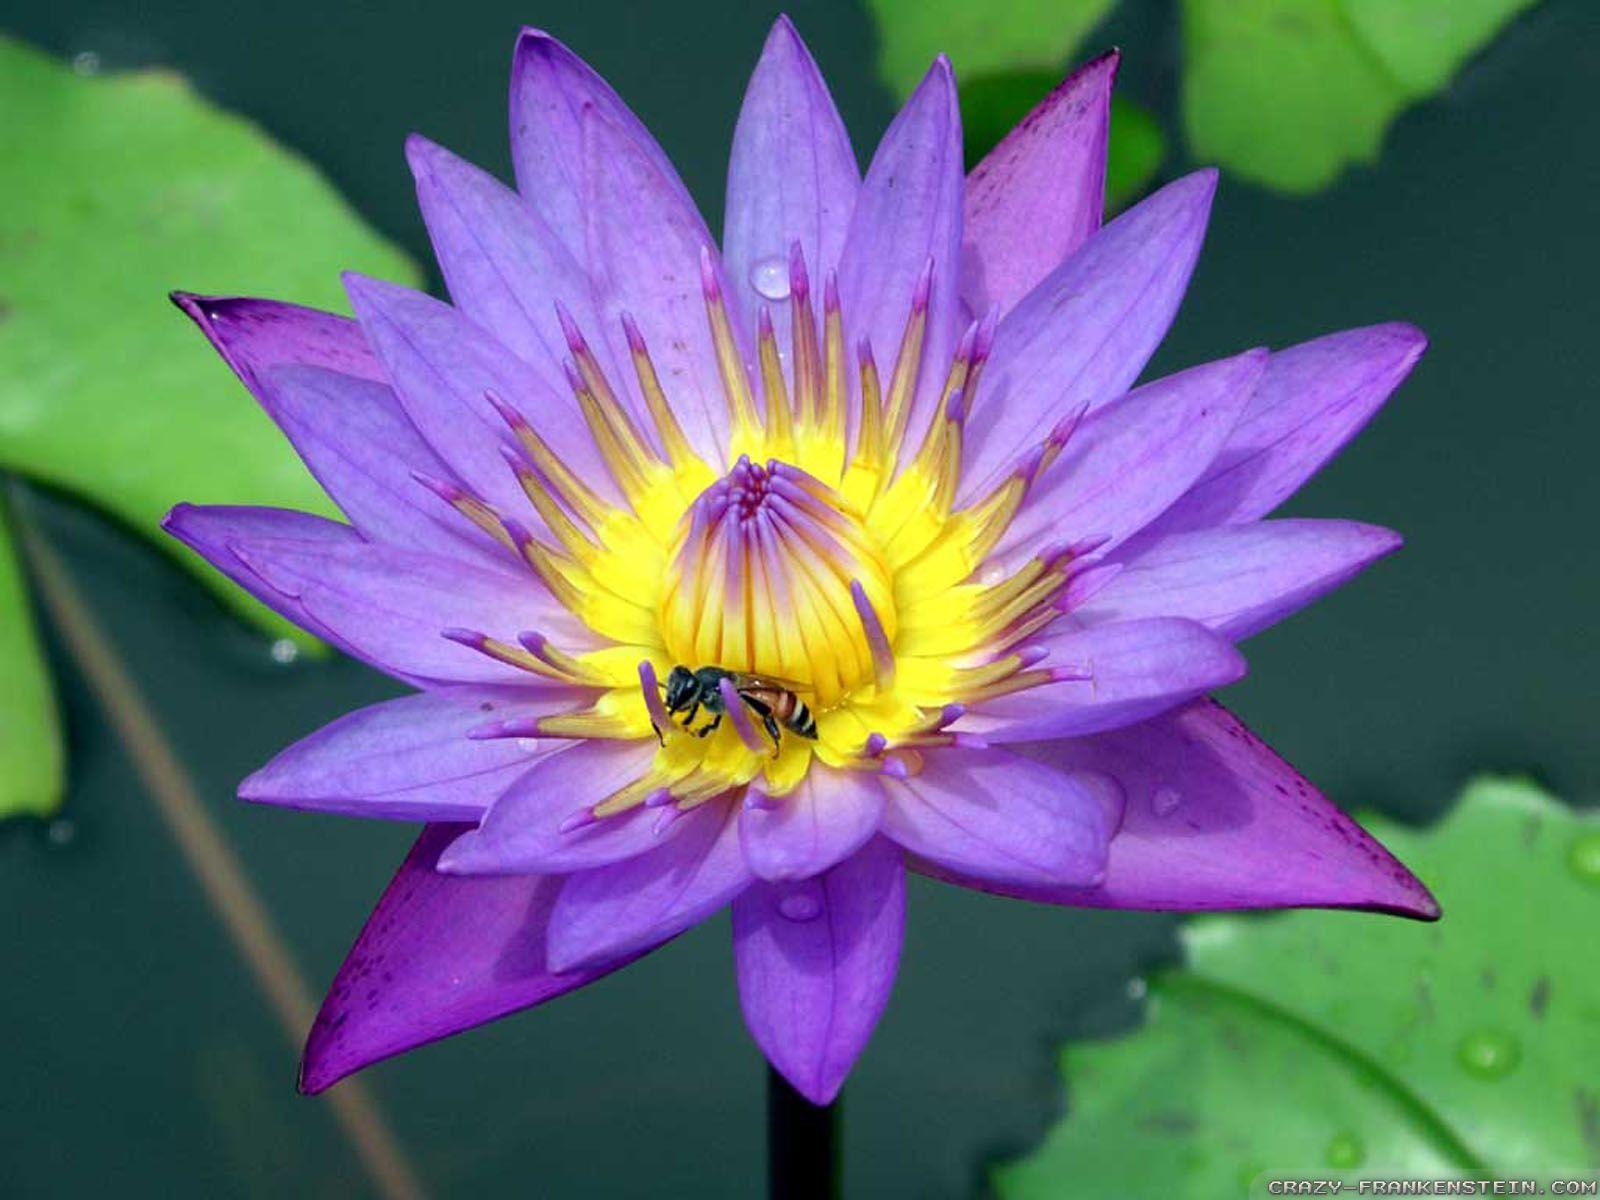 Purple Lotus Flower Wallpaper For iPhone Free Download > SubWallpaper